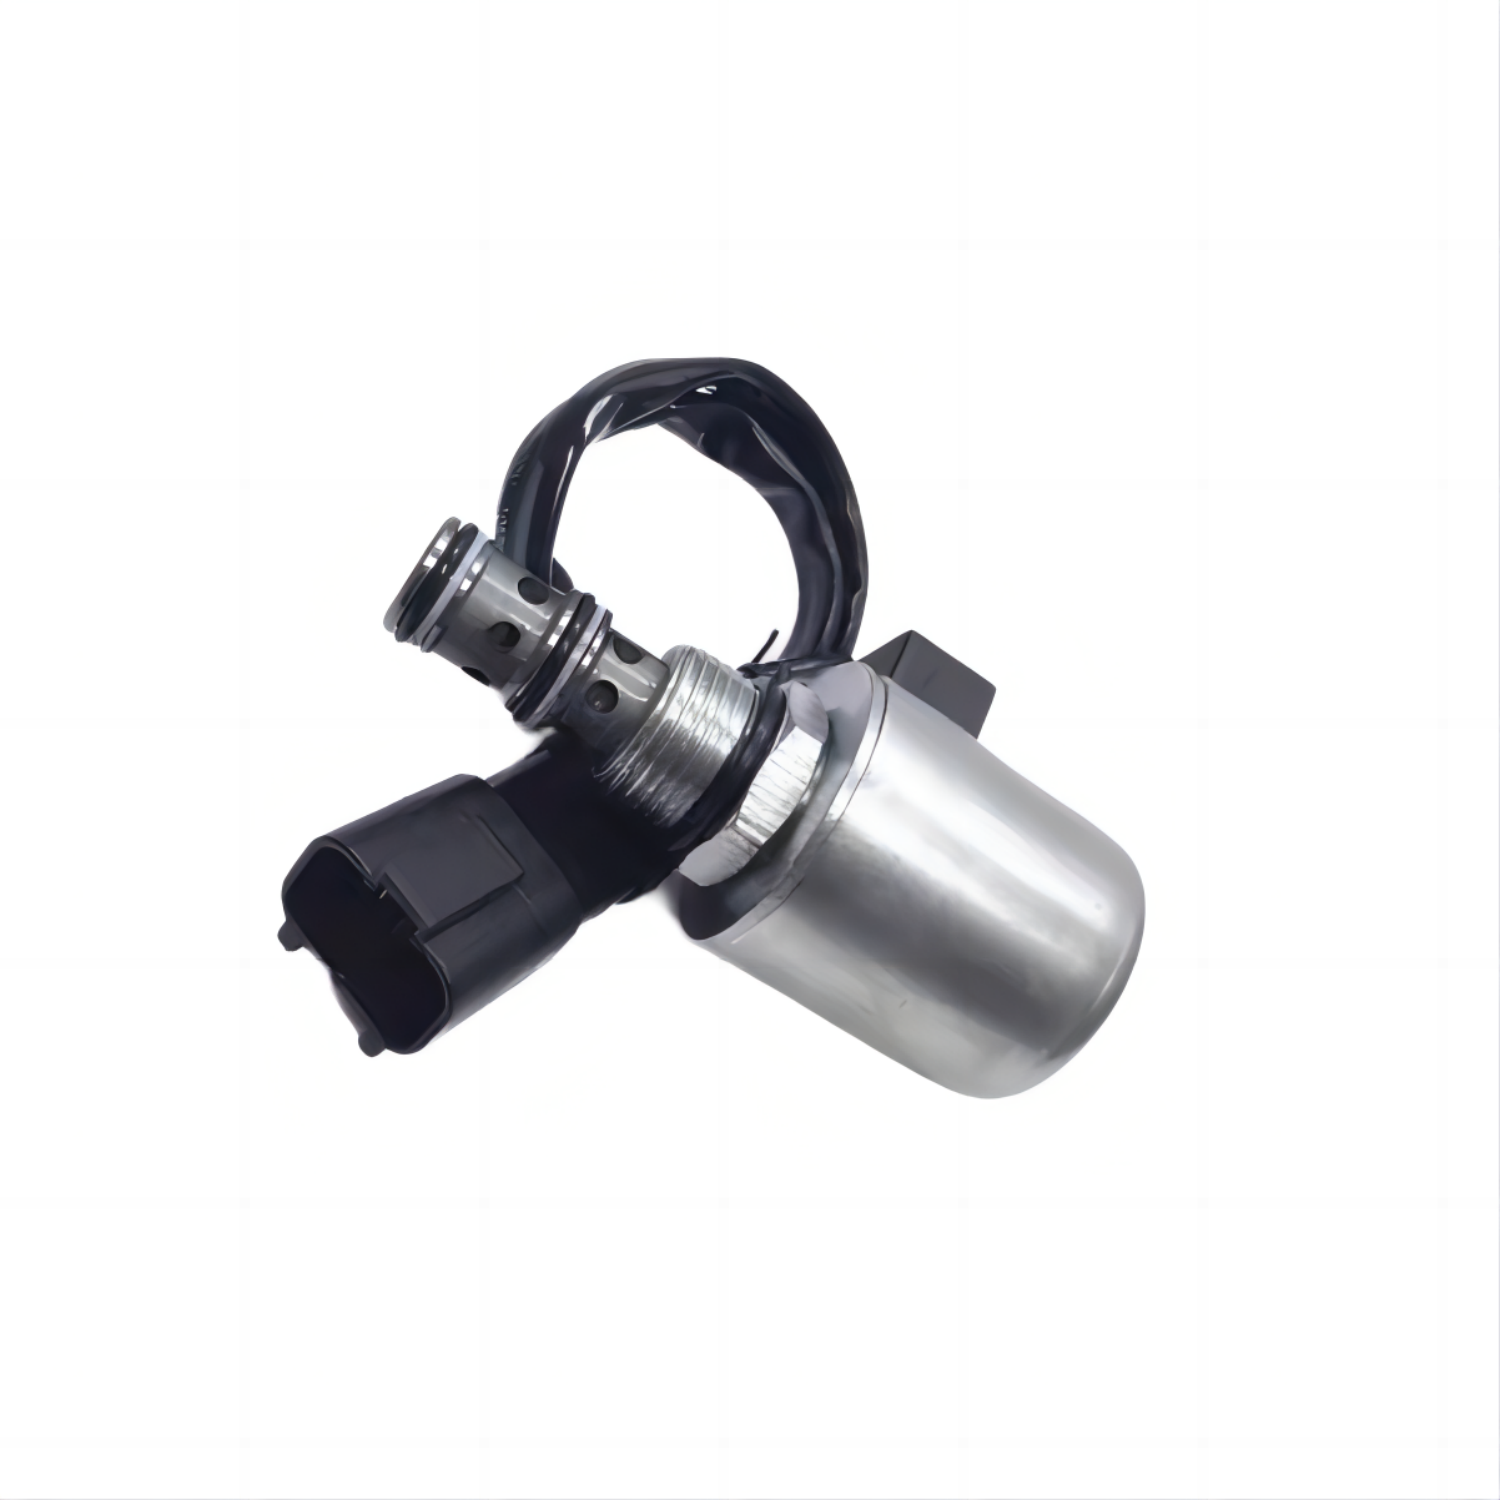 Excavator solenoid valve 21P-60-K5160 Hydraulic solenoid valve is suitable for Komatsu PC150-6 PC160-6